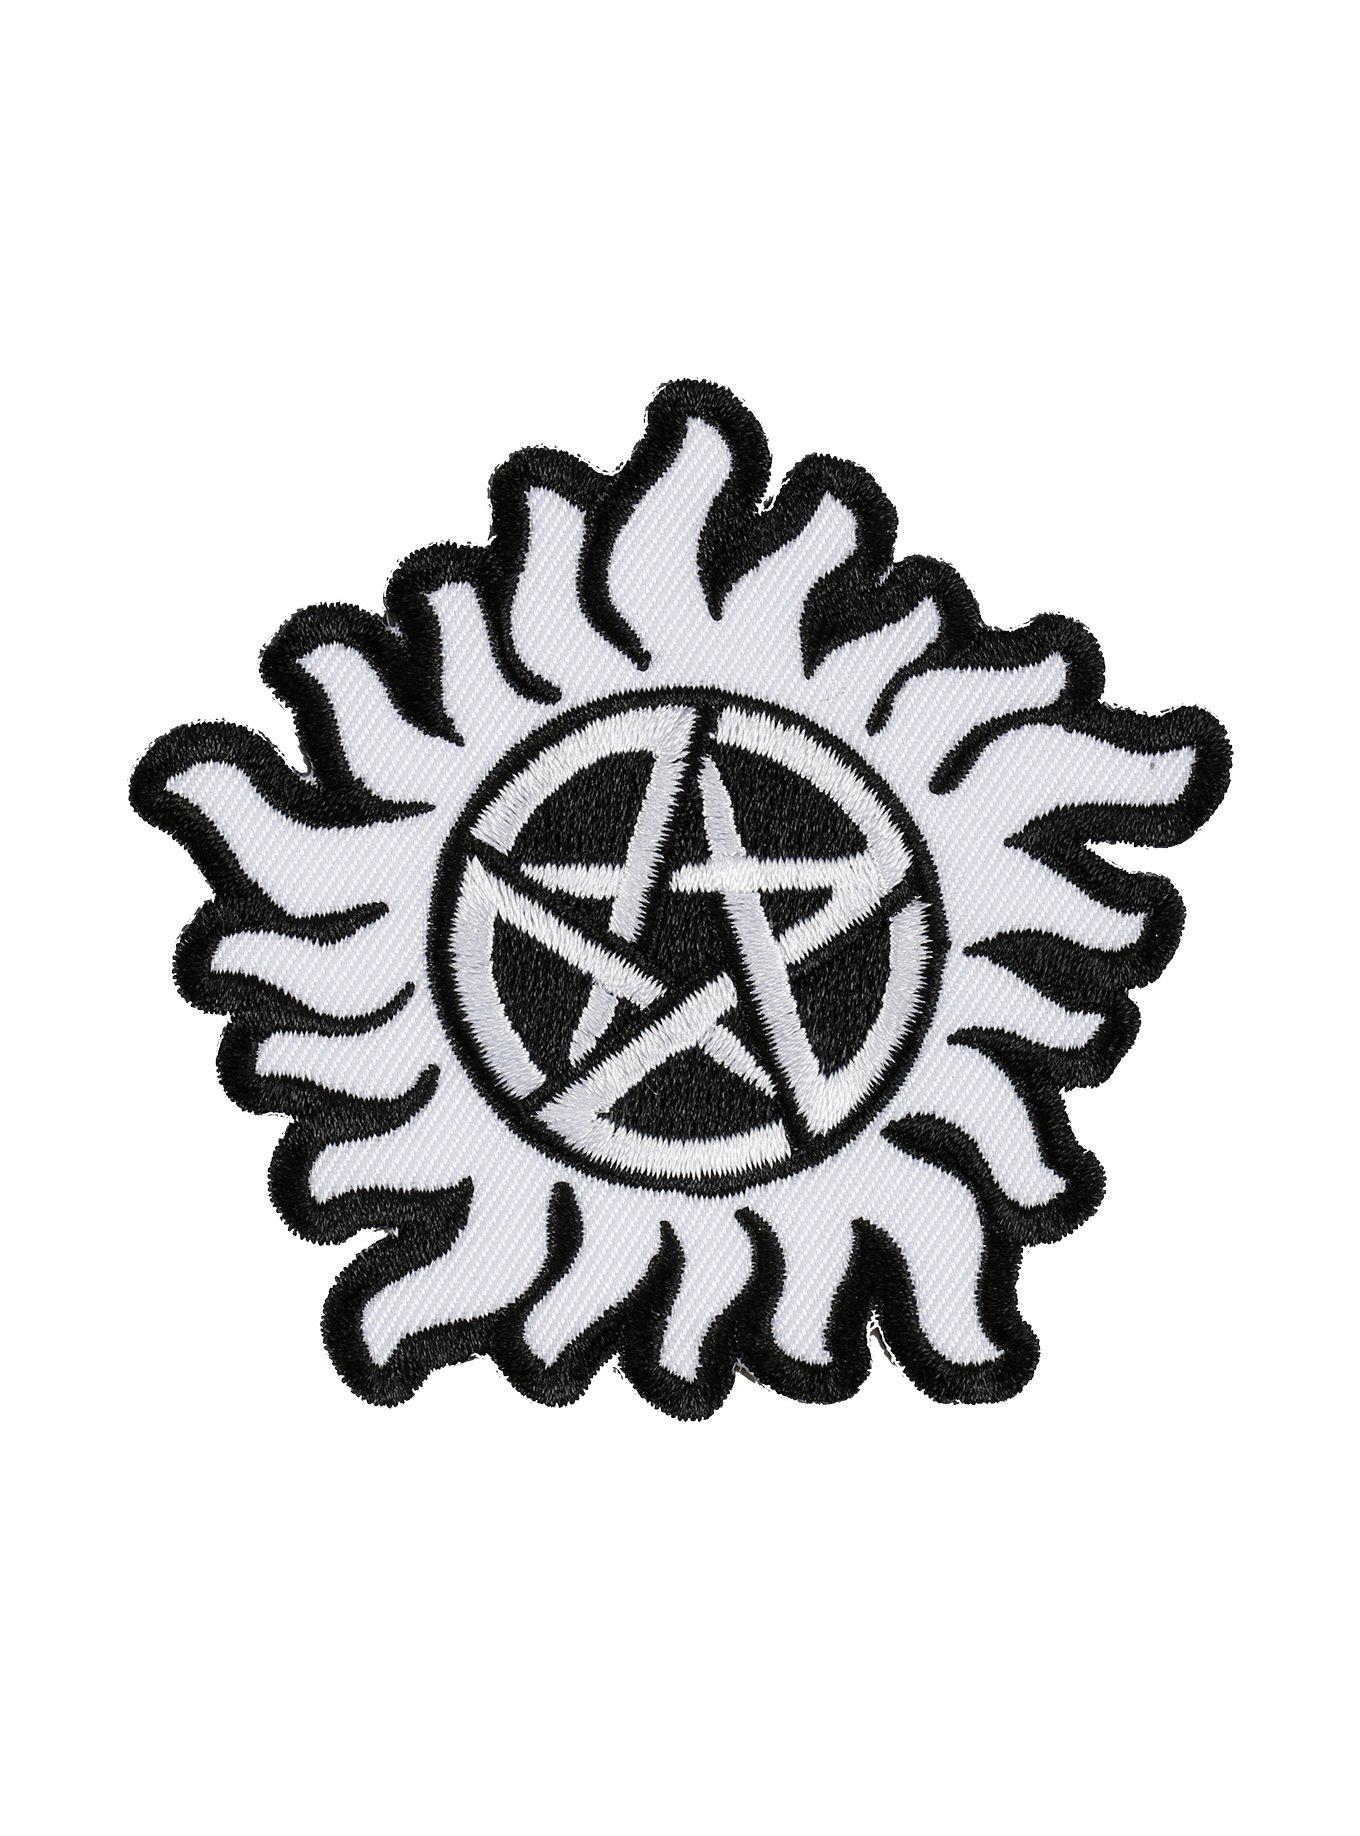 Supernatural Anti-Possession Symbol Iron-On Patch, , hi-res